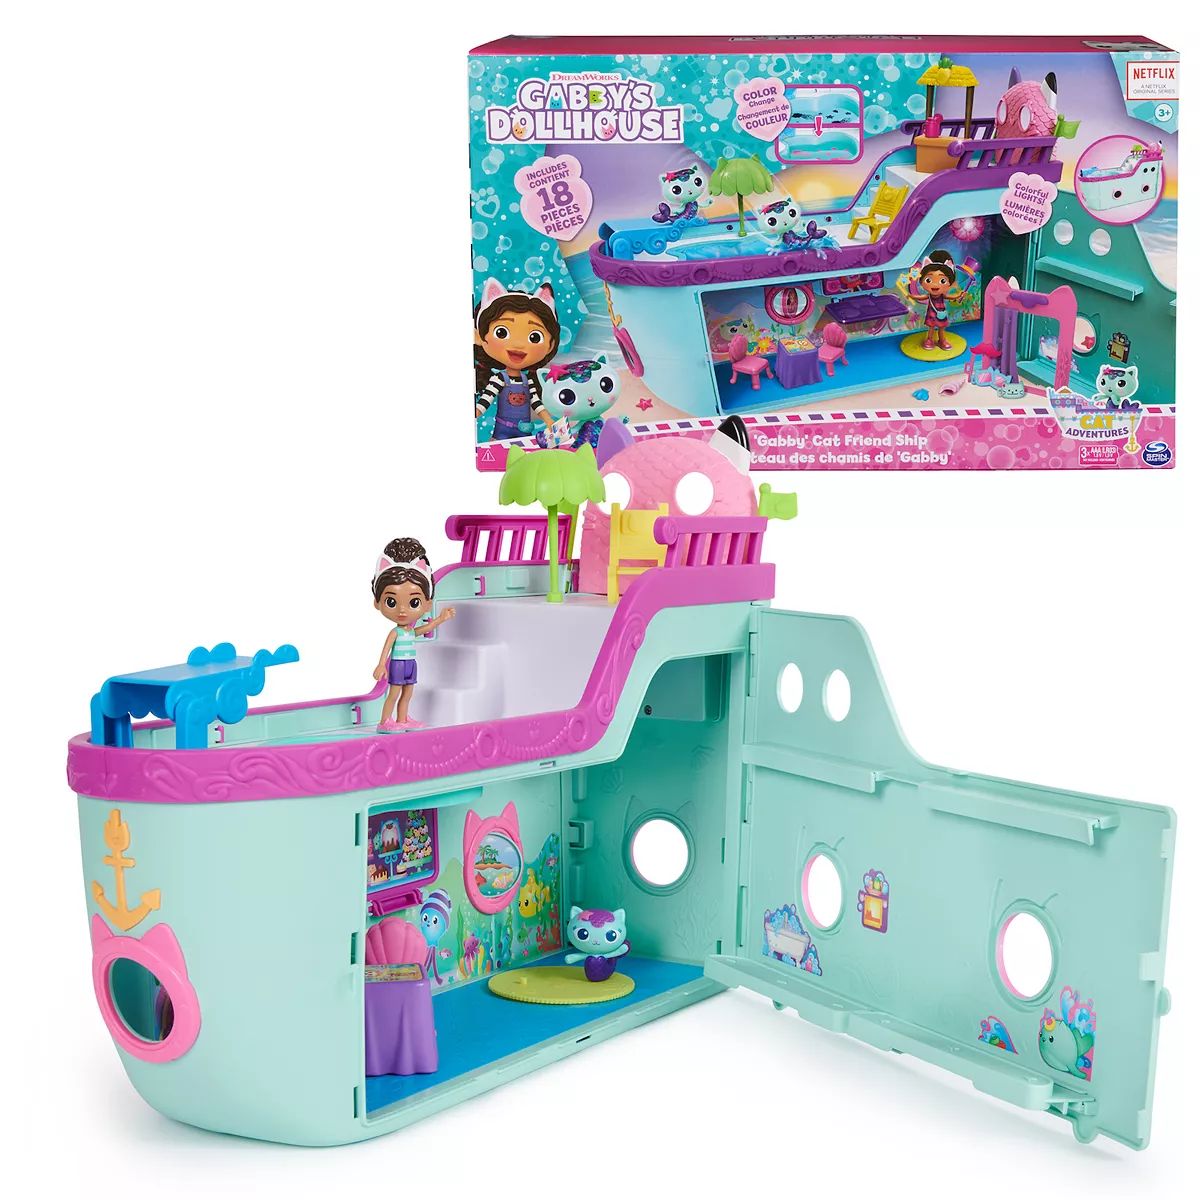 Gabby's Dollhouse Cruise Ship Toy | Kohl's